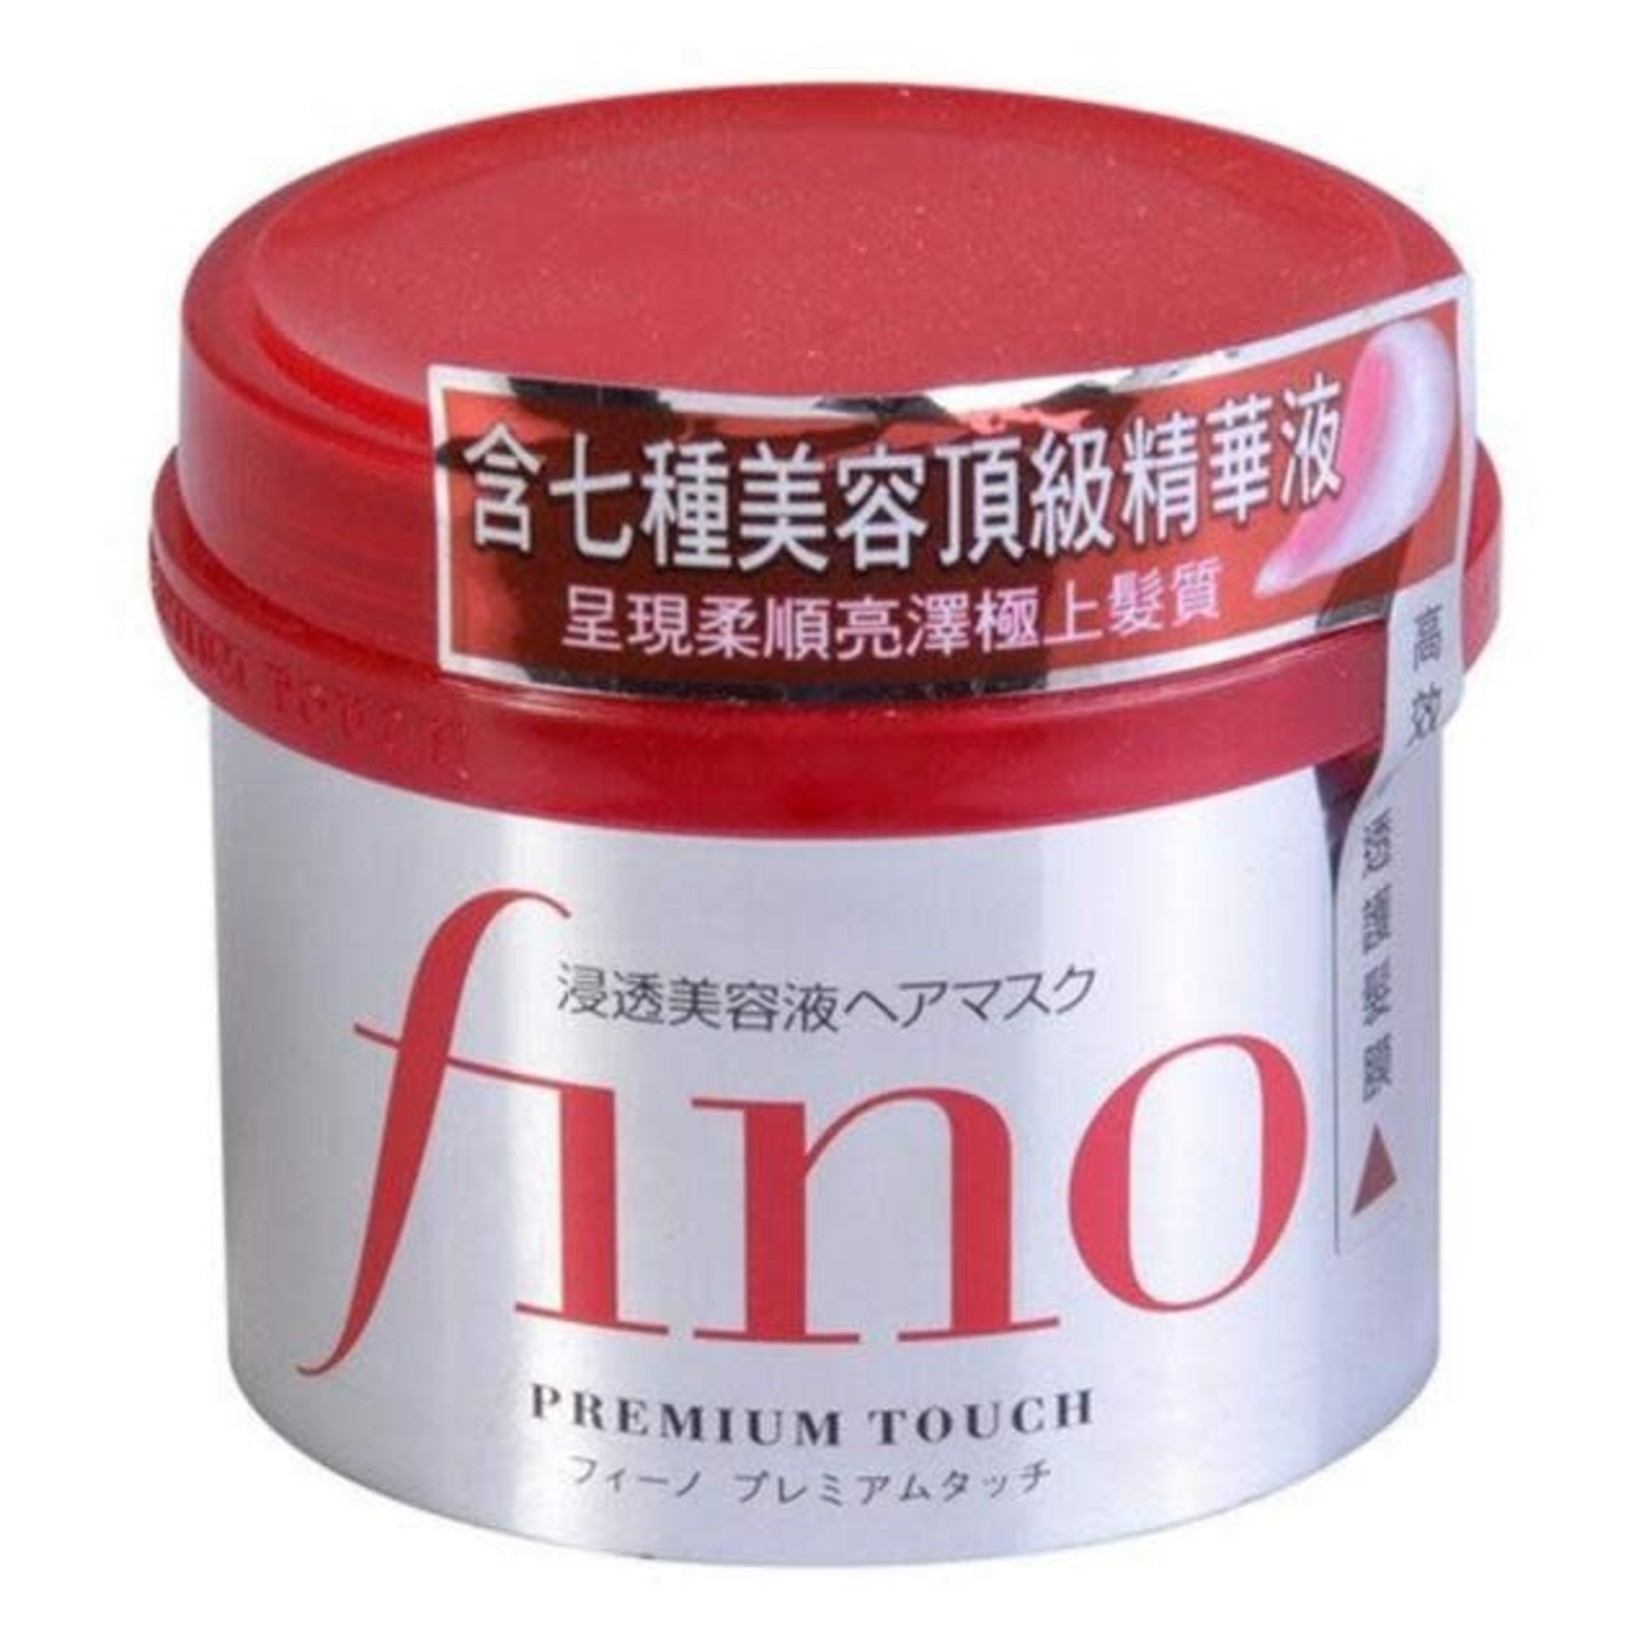 Shiseido Shiseido Fino Premium Touch Penetration Essence Hair Mask 230-Gram